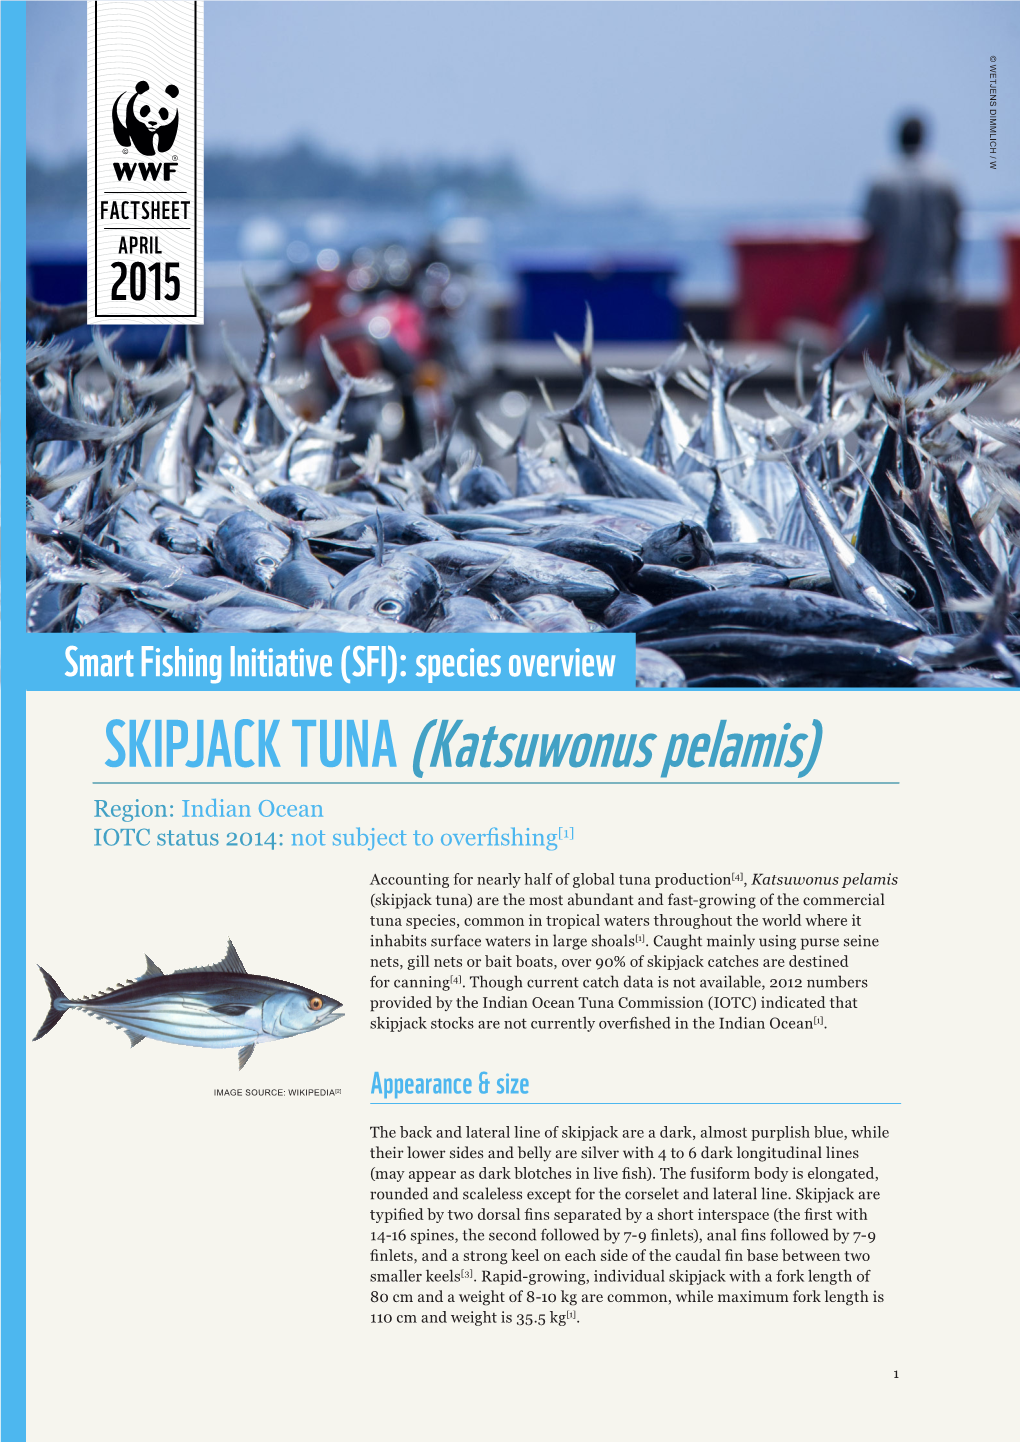 SKIPJACK TUNA (Katsuwonus Pelamis) Region: Indian Ocean IOTC Status 2014: Not Subject to Overfishing[1]